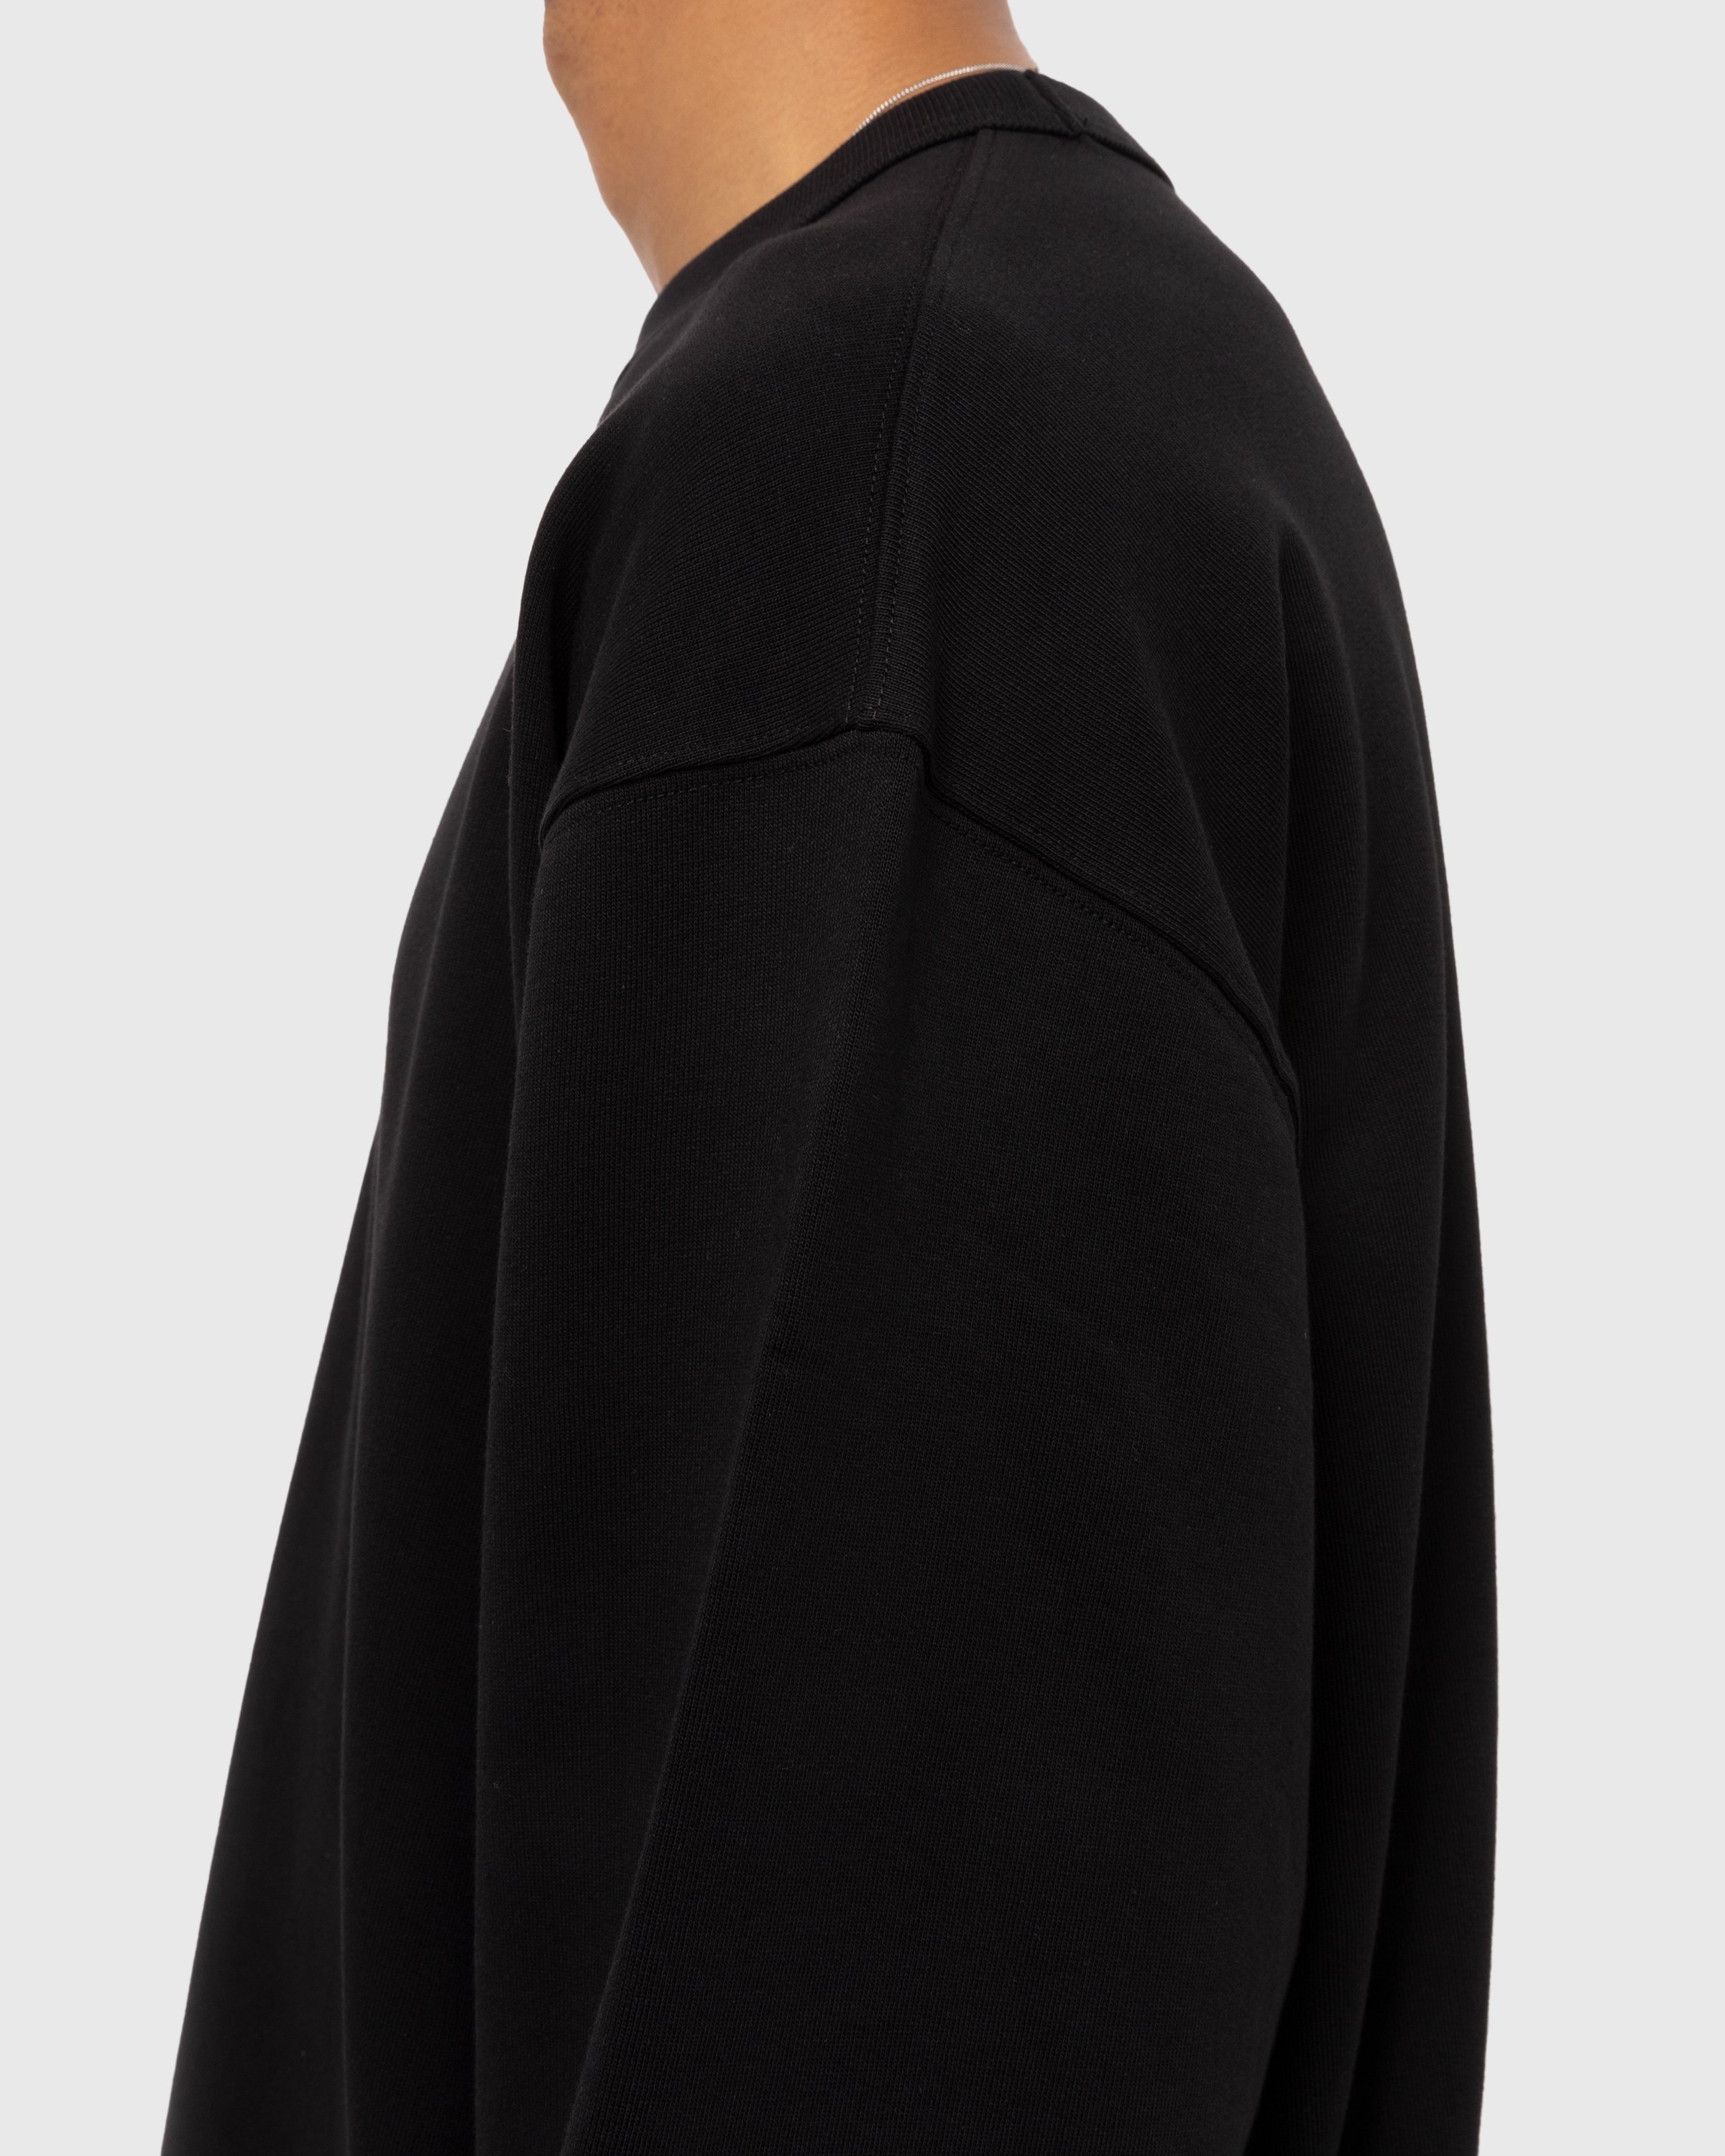 Dries van Noten - Hax Oversized Crewneck Black - Clothing - Black - Image 4